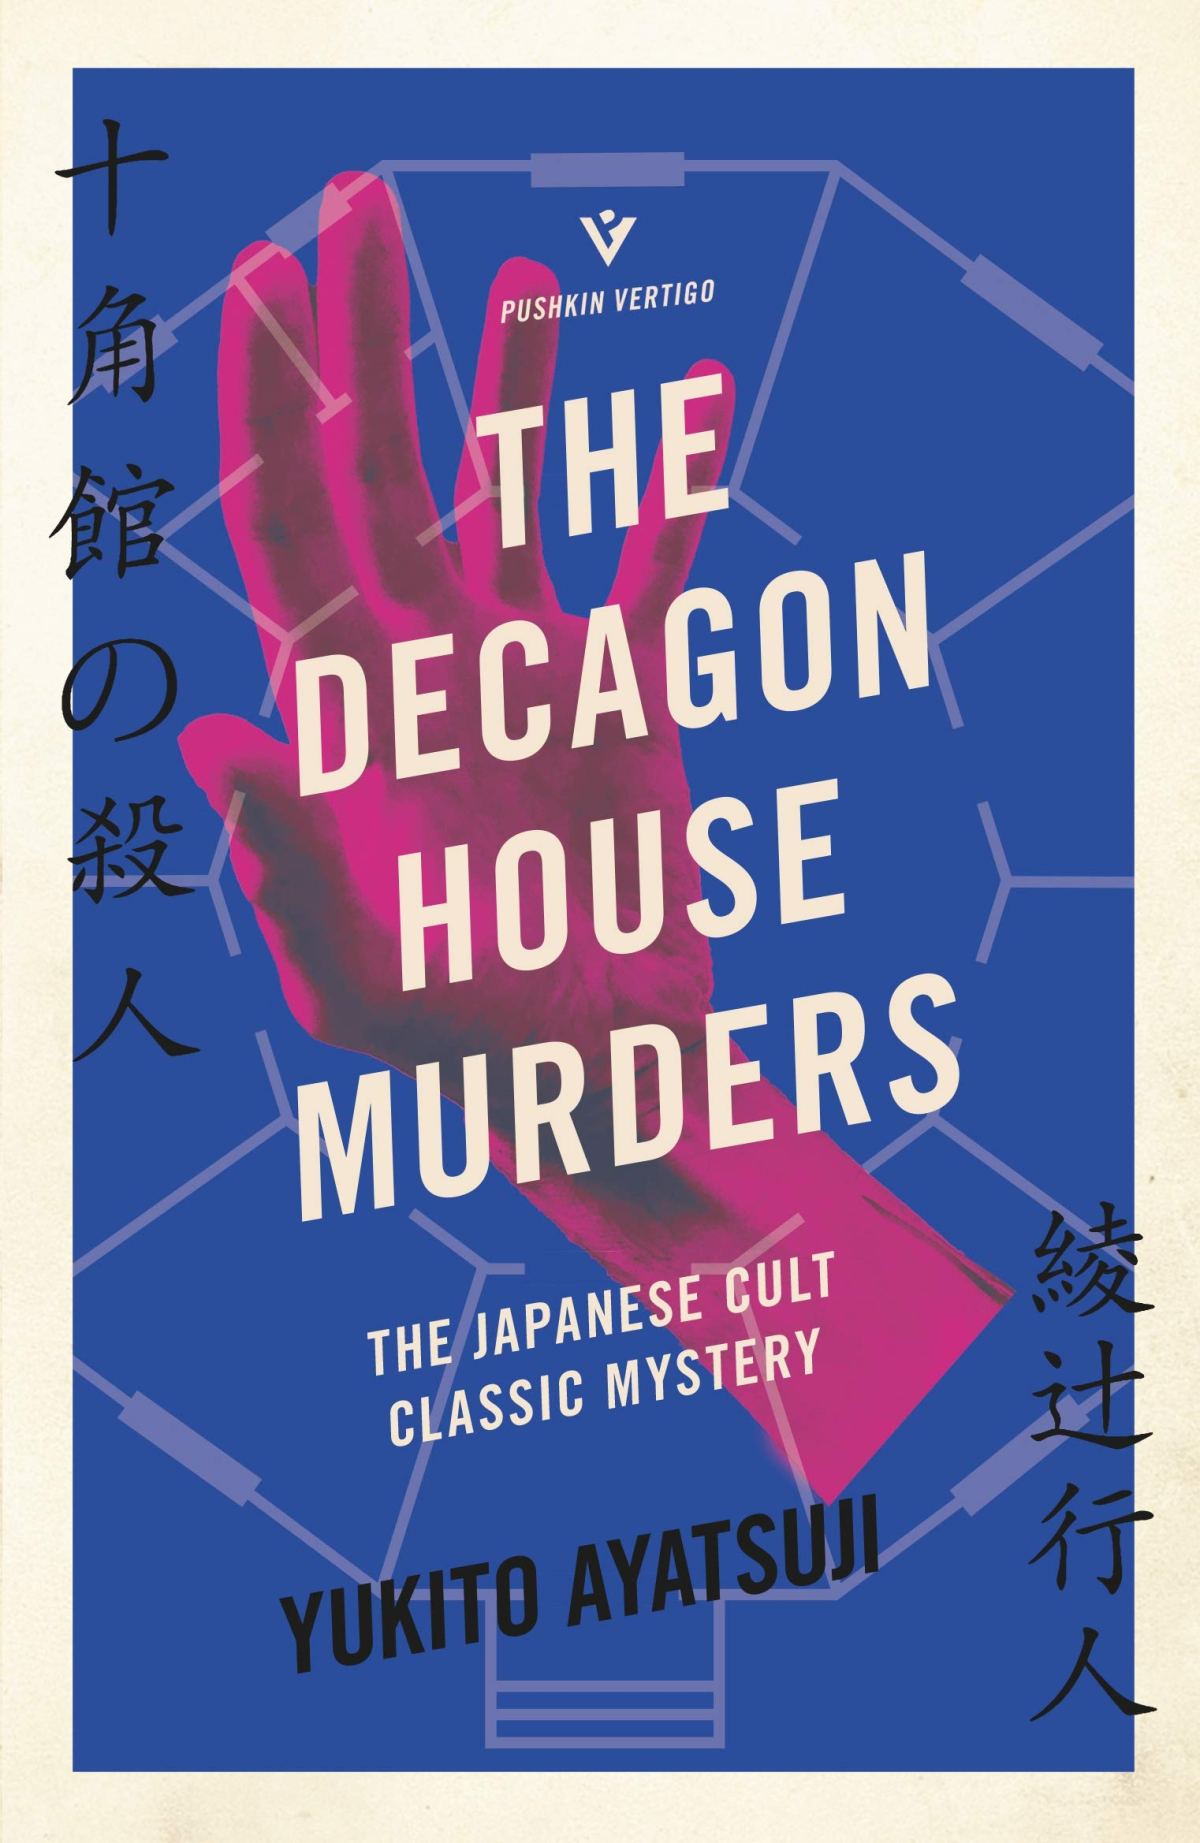 Book 148 – The Decagon House Murders by Yukito Ayatsuji